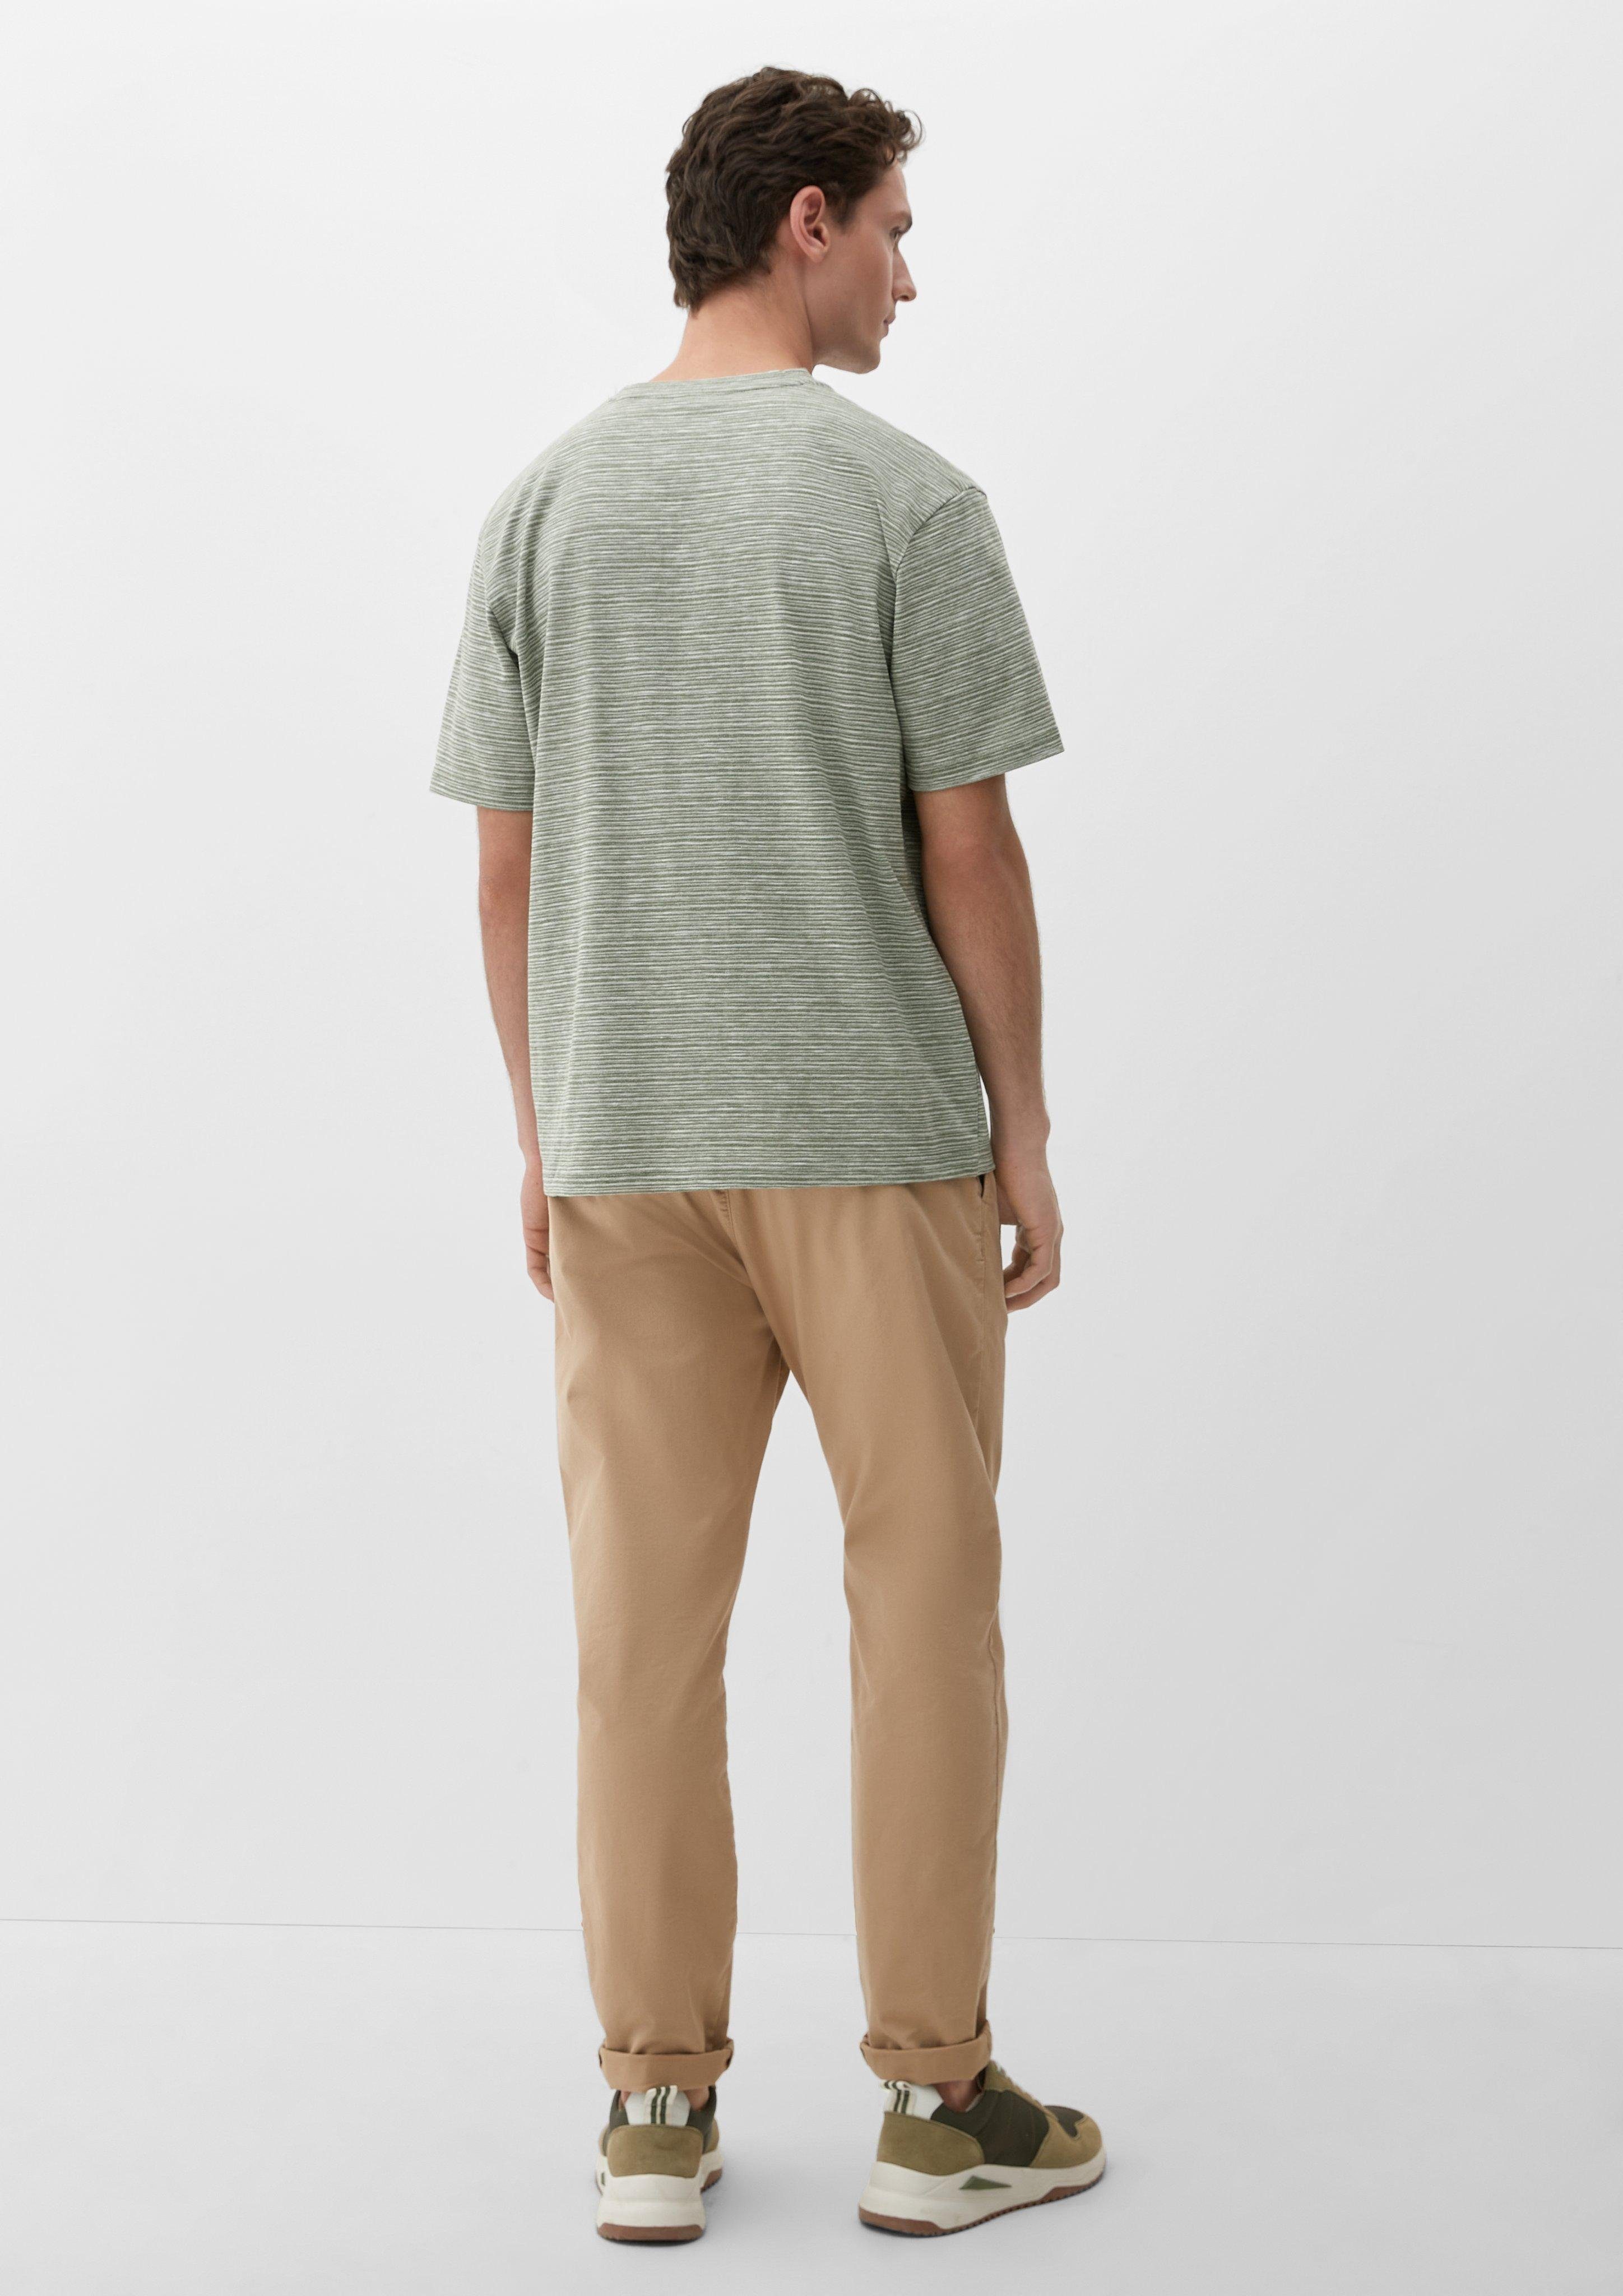 s.Oliver Kurzarmshirt helles T-Shirt aus Blende olivgrün Flammgarn-Jersey